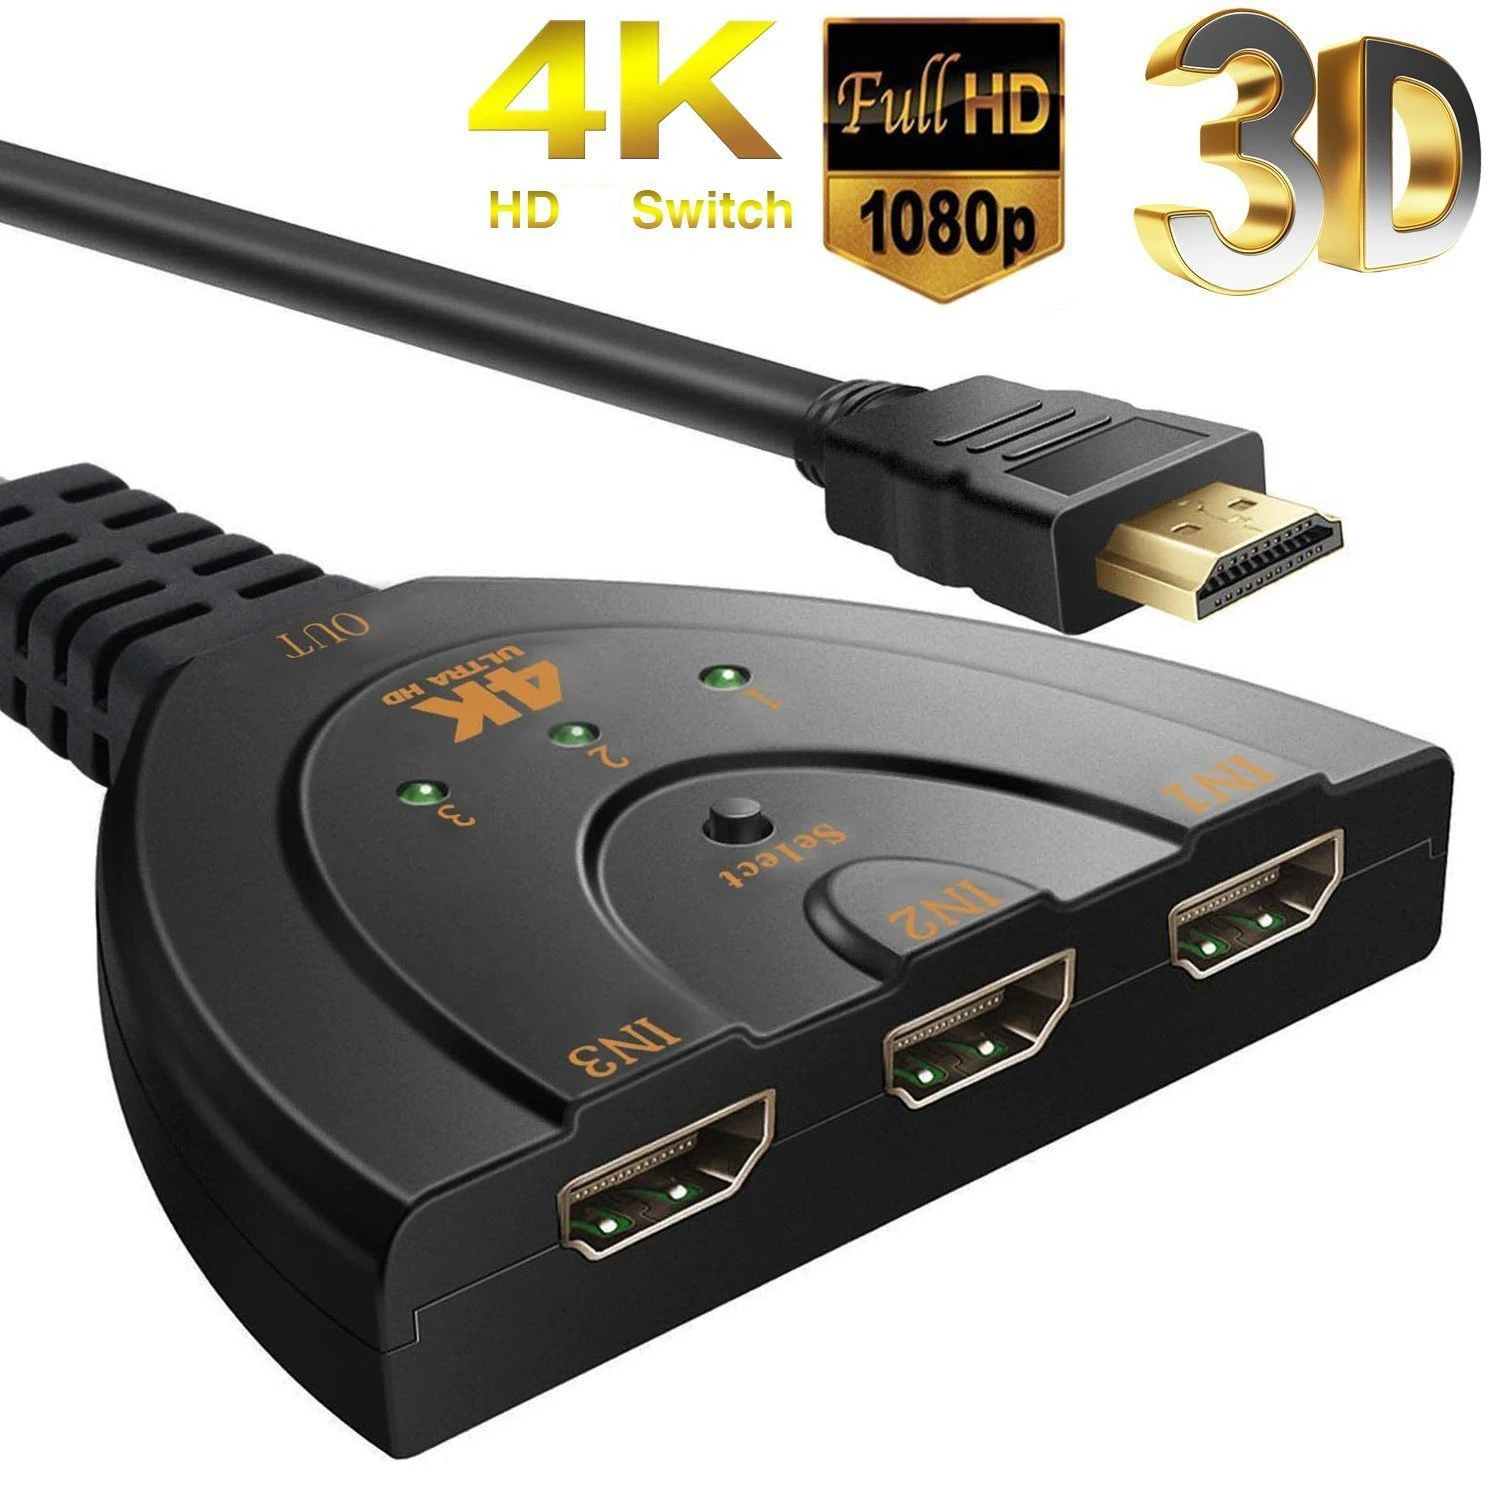 

HDMI-compatible Switch KVM Splitter 4K 2K 3D 3 input 1 Output Mini 3 Port VIdeo Switcher HUB 1080P For DVD HDTV Xbox PS3 PS4